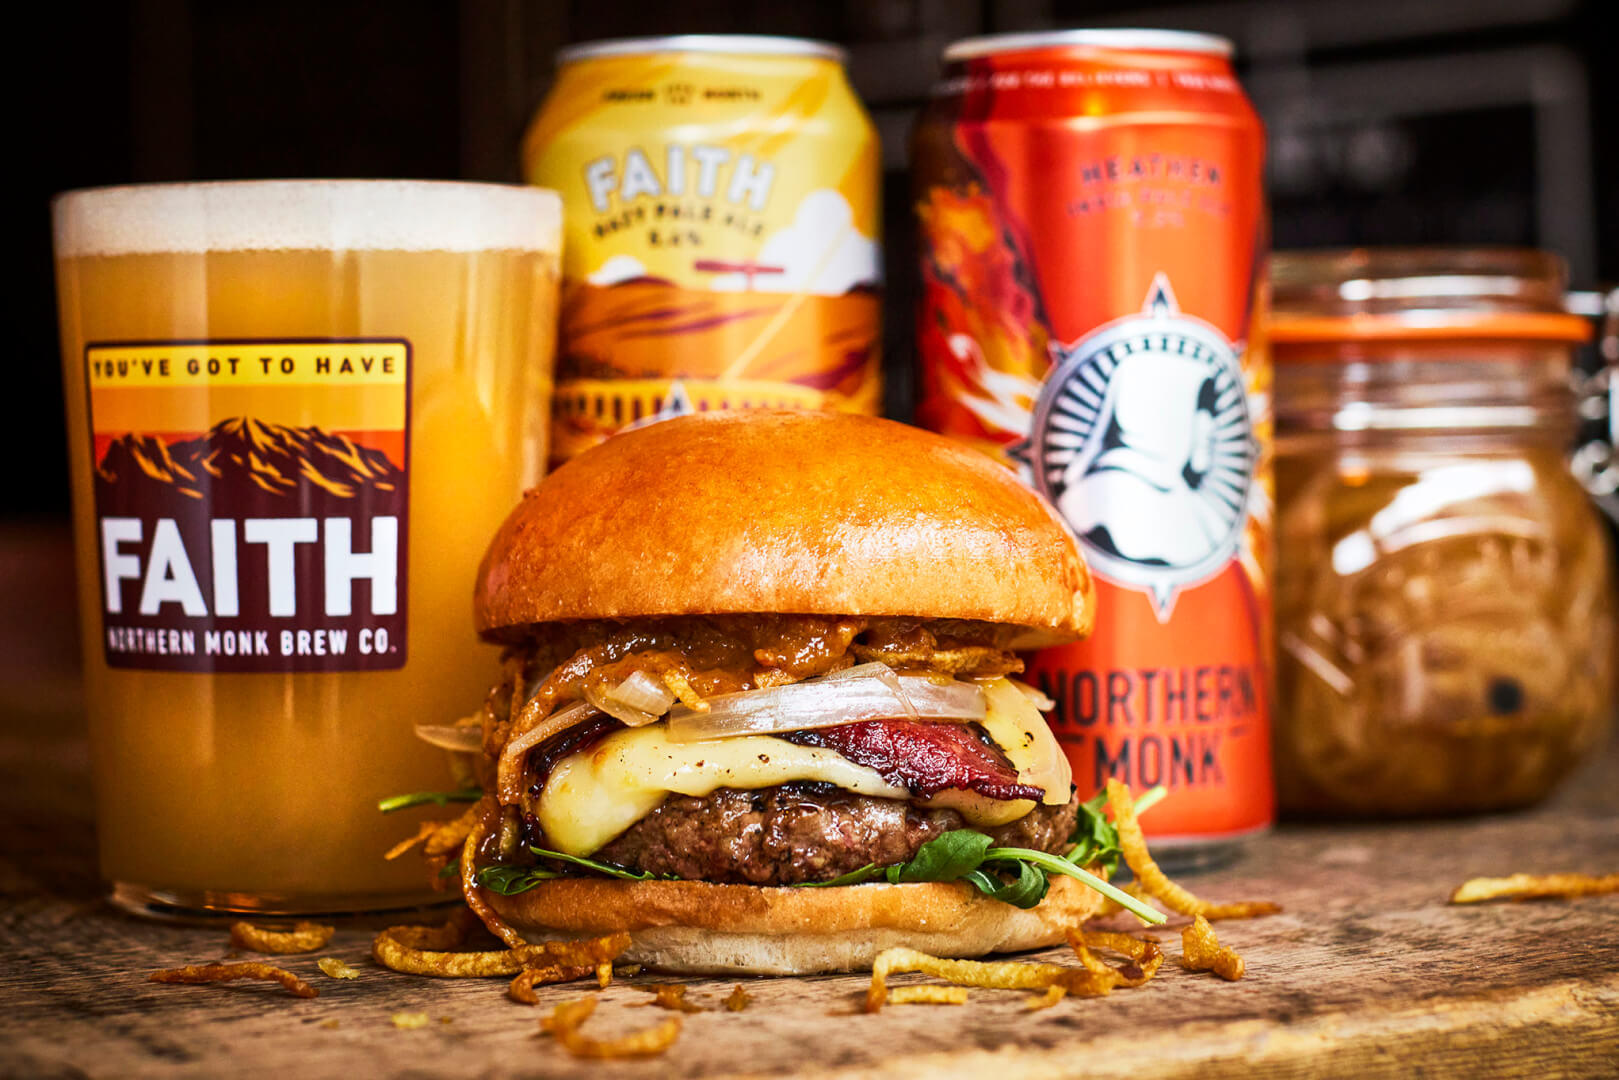 An exclusive Leeds burger using Northern Monk beers as ingredients